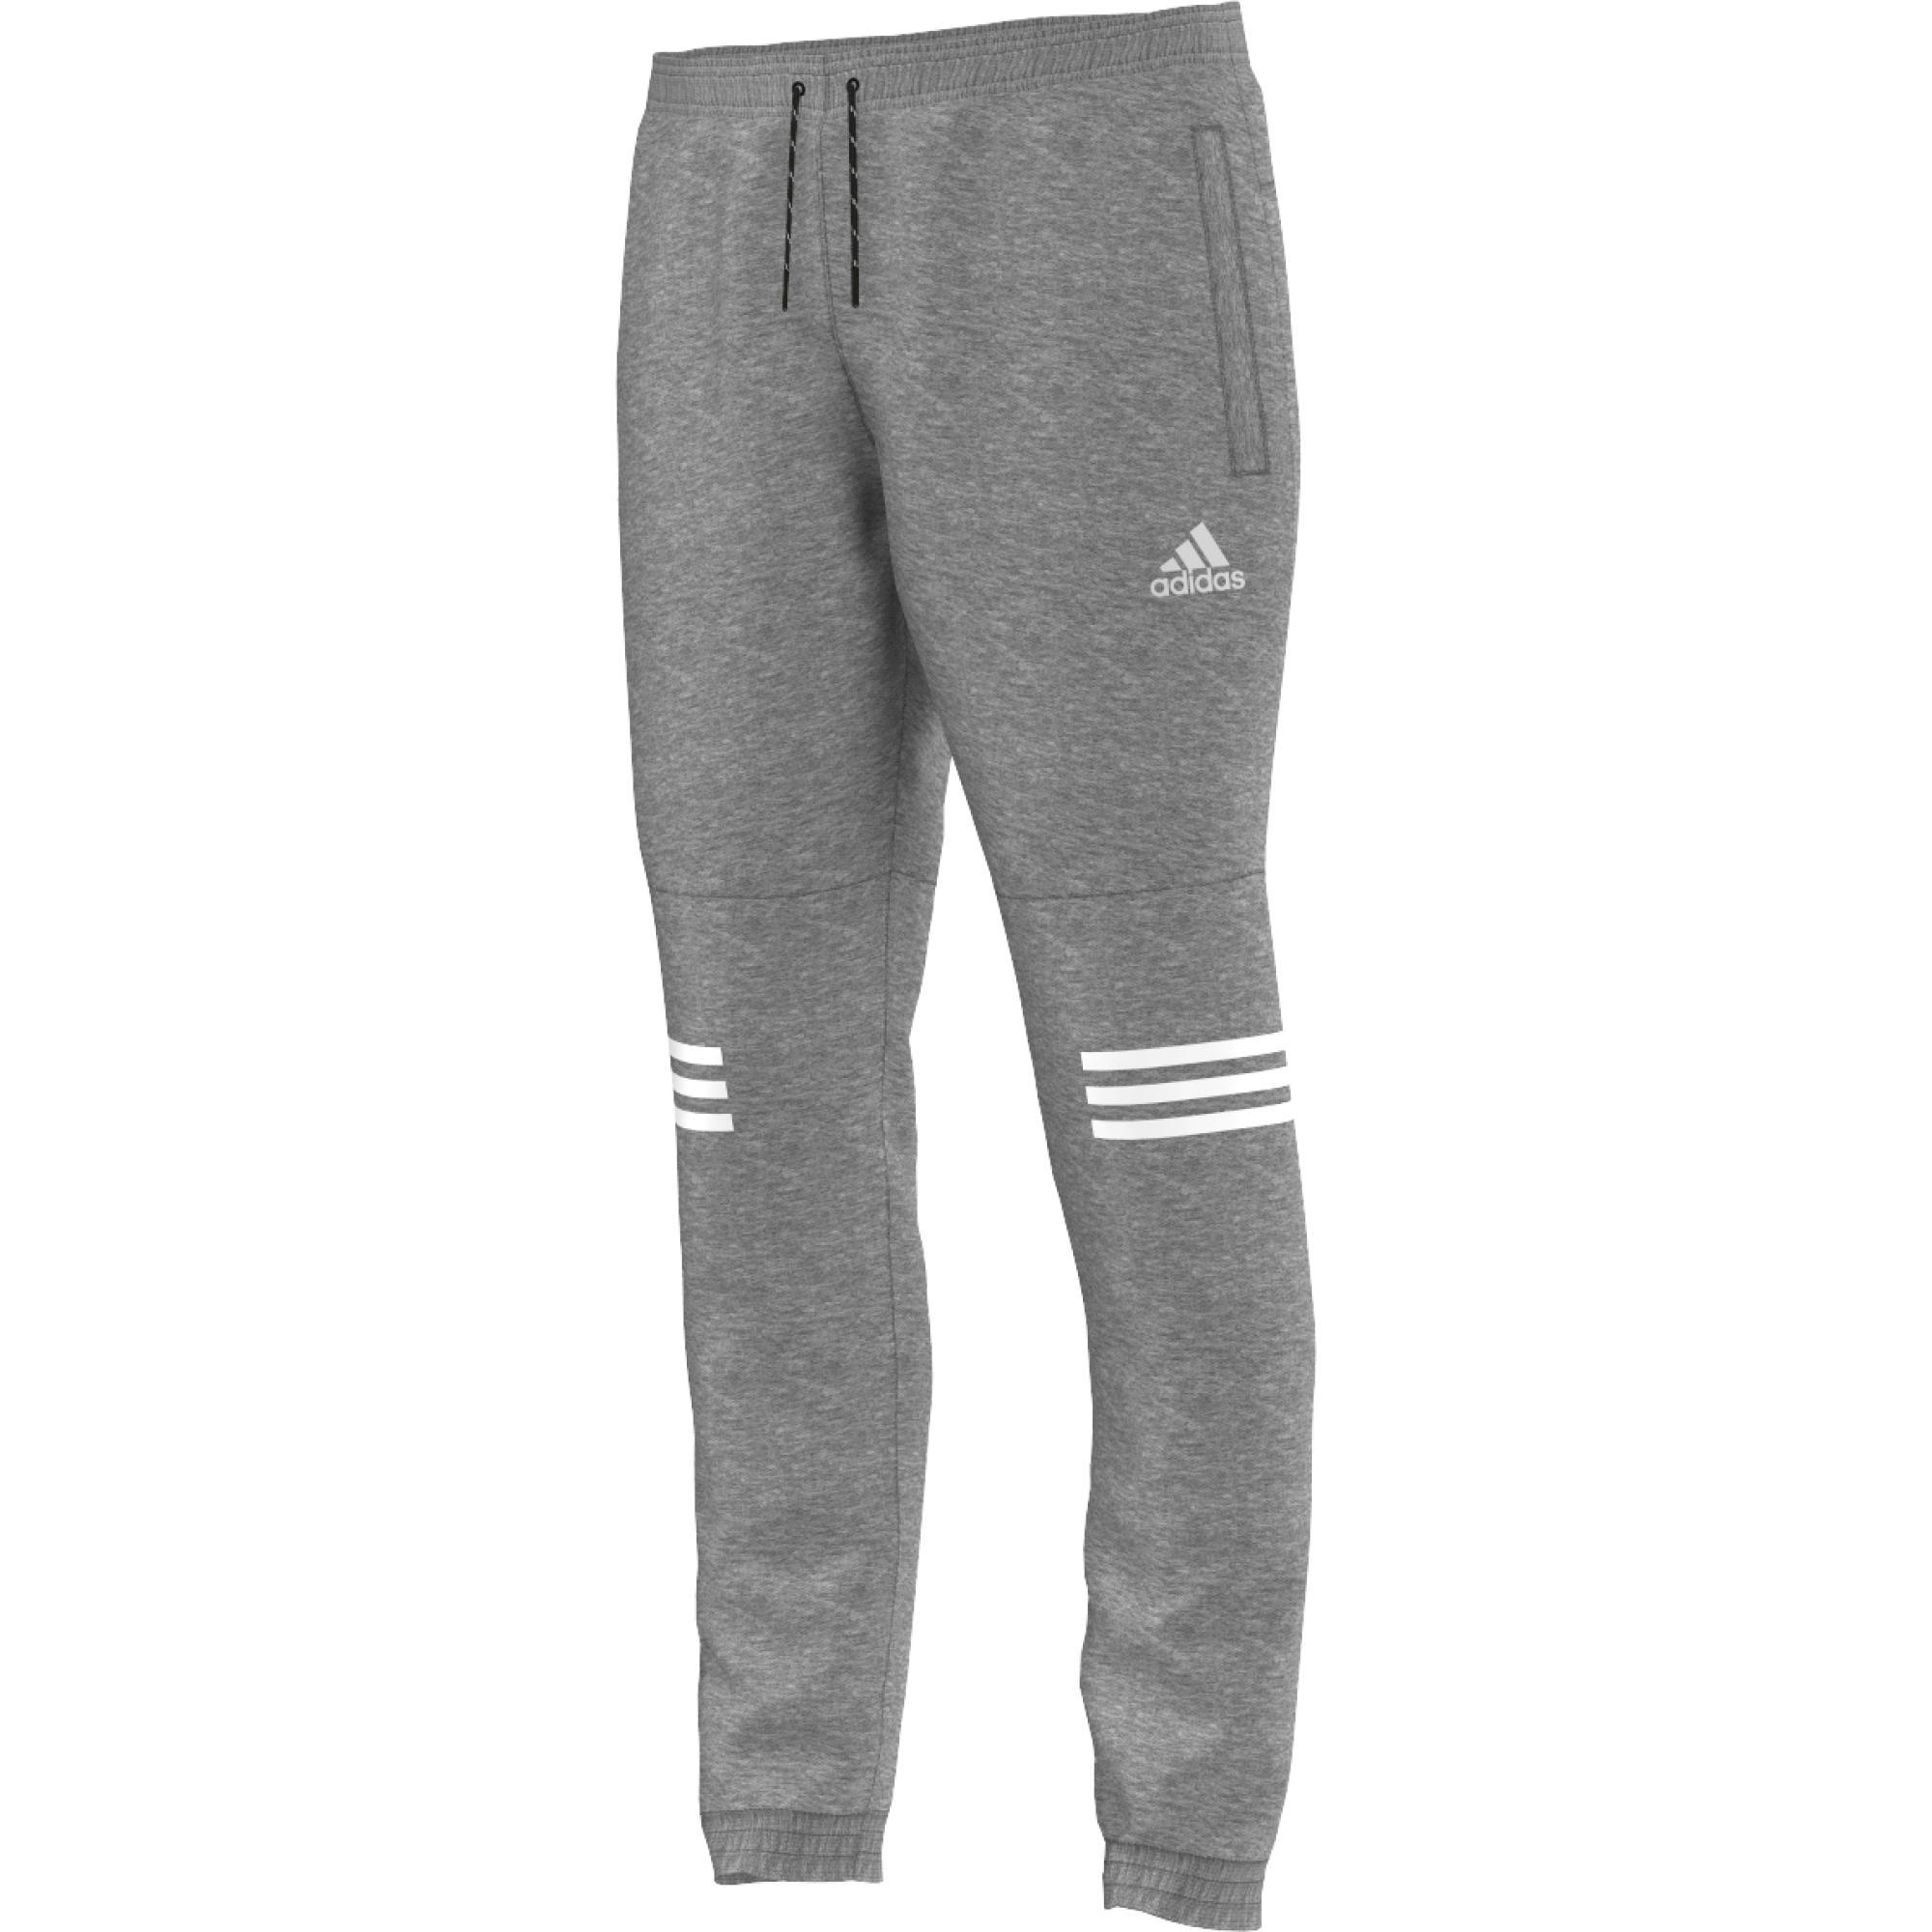 Adidas Mens Lineage 3 Stripes Sweatpants - Core Heather Grey ...